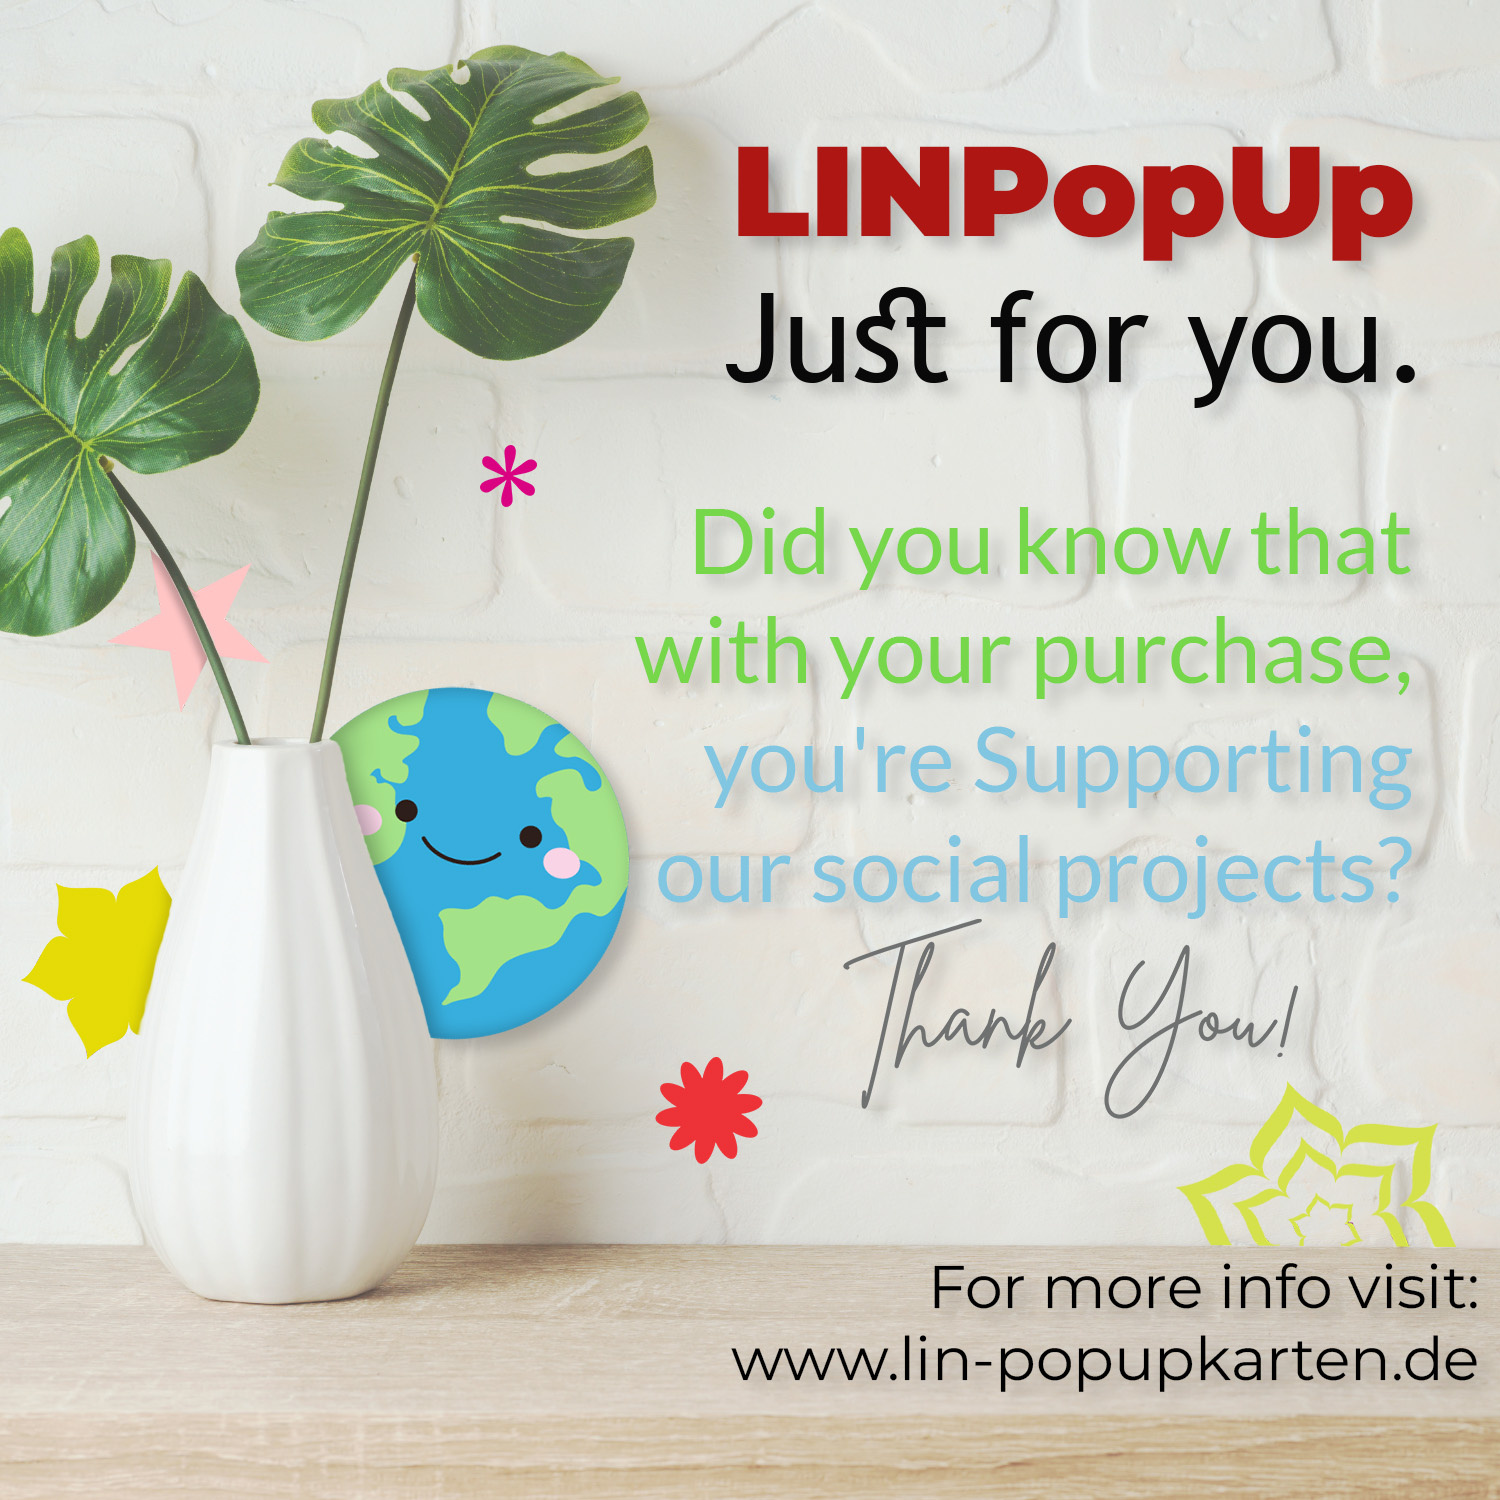 LINPOPUP Pop Up 3D Card, Wedding Invitation, Wedding Card, Wedding Carriage, LINPopUp®, N73